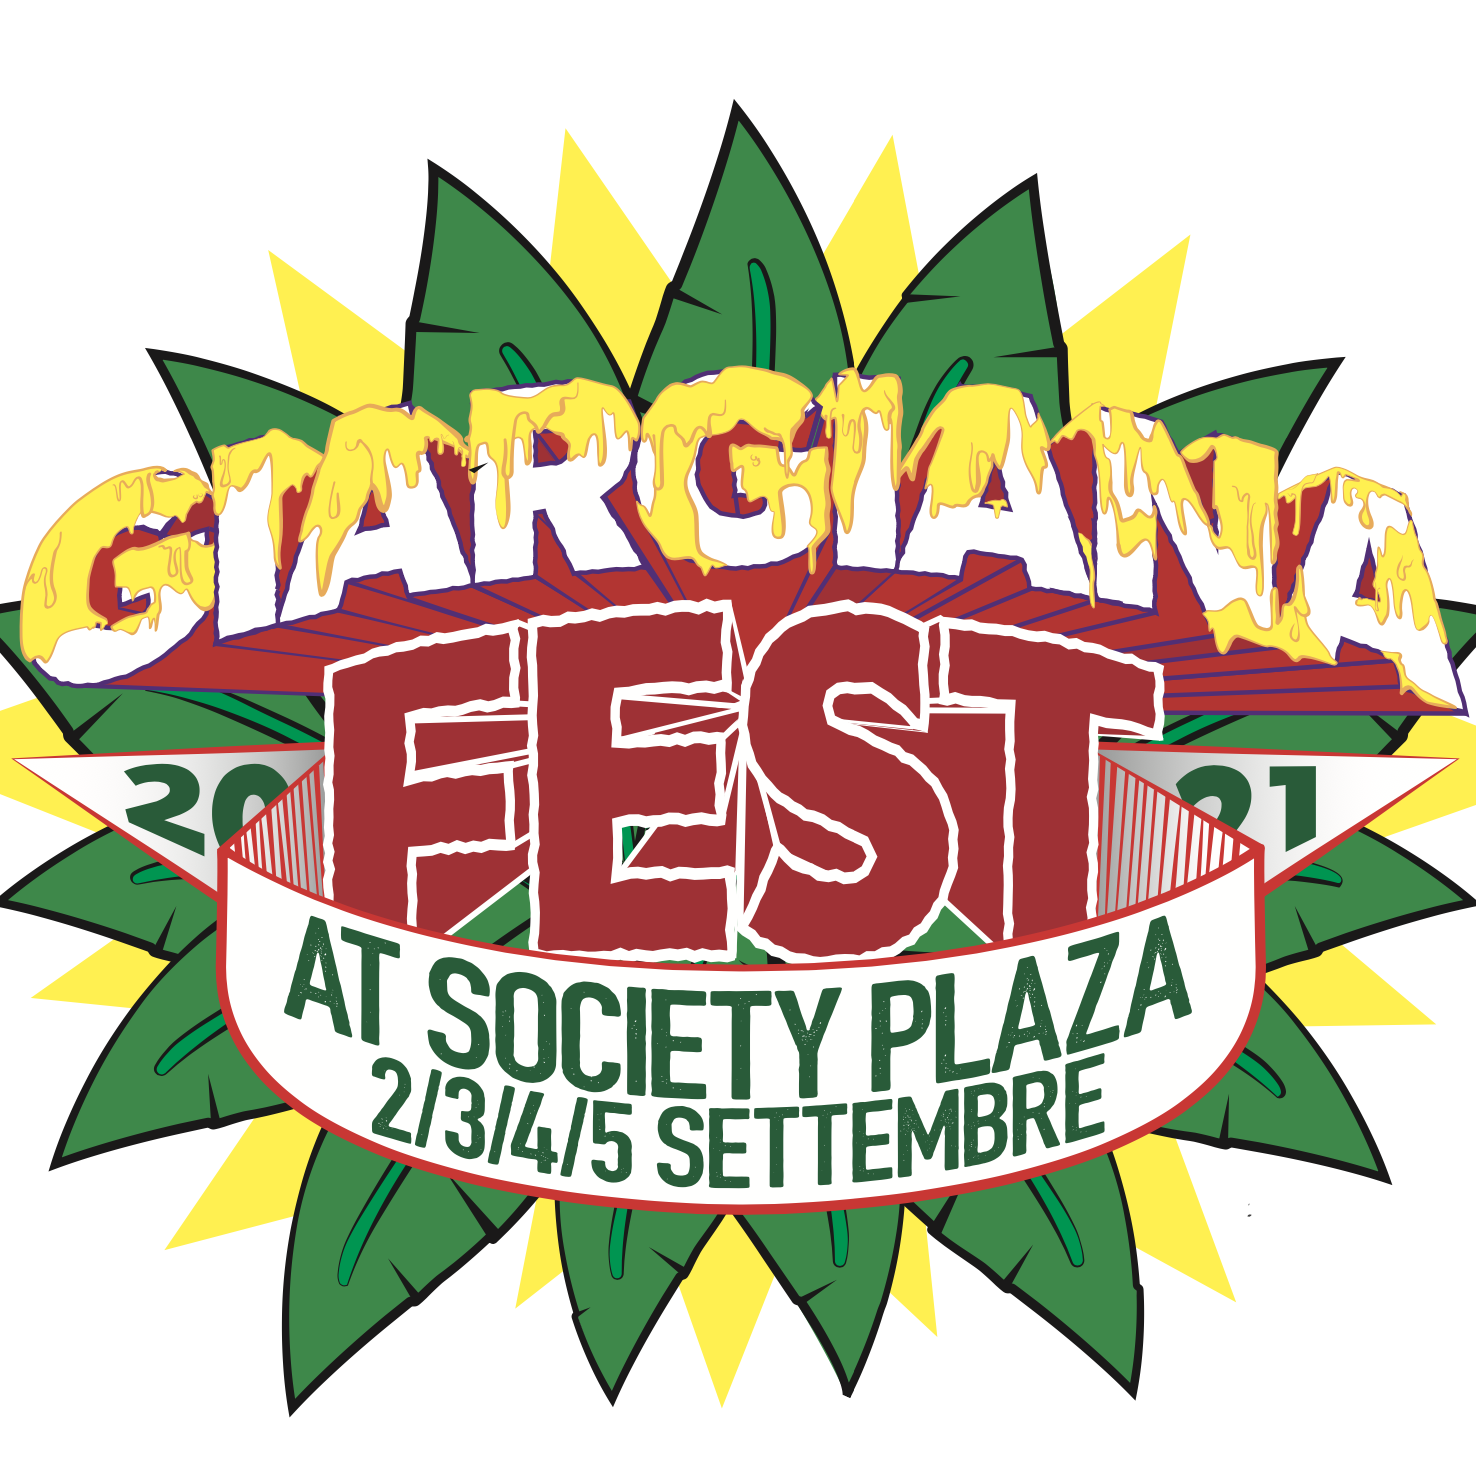 Giargiana Fest